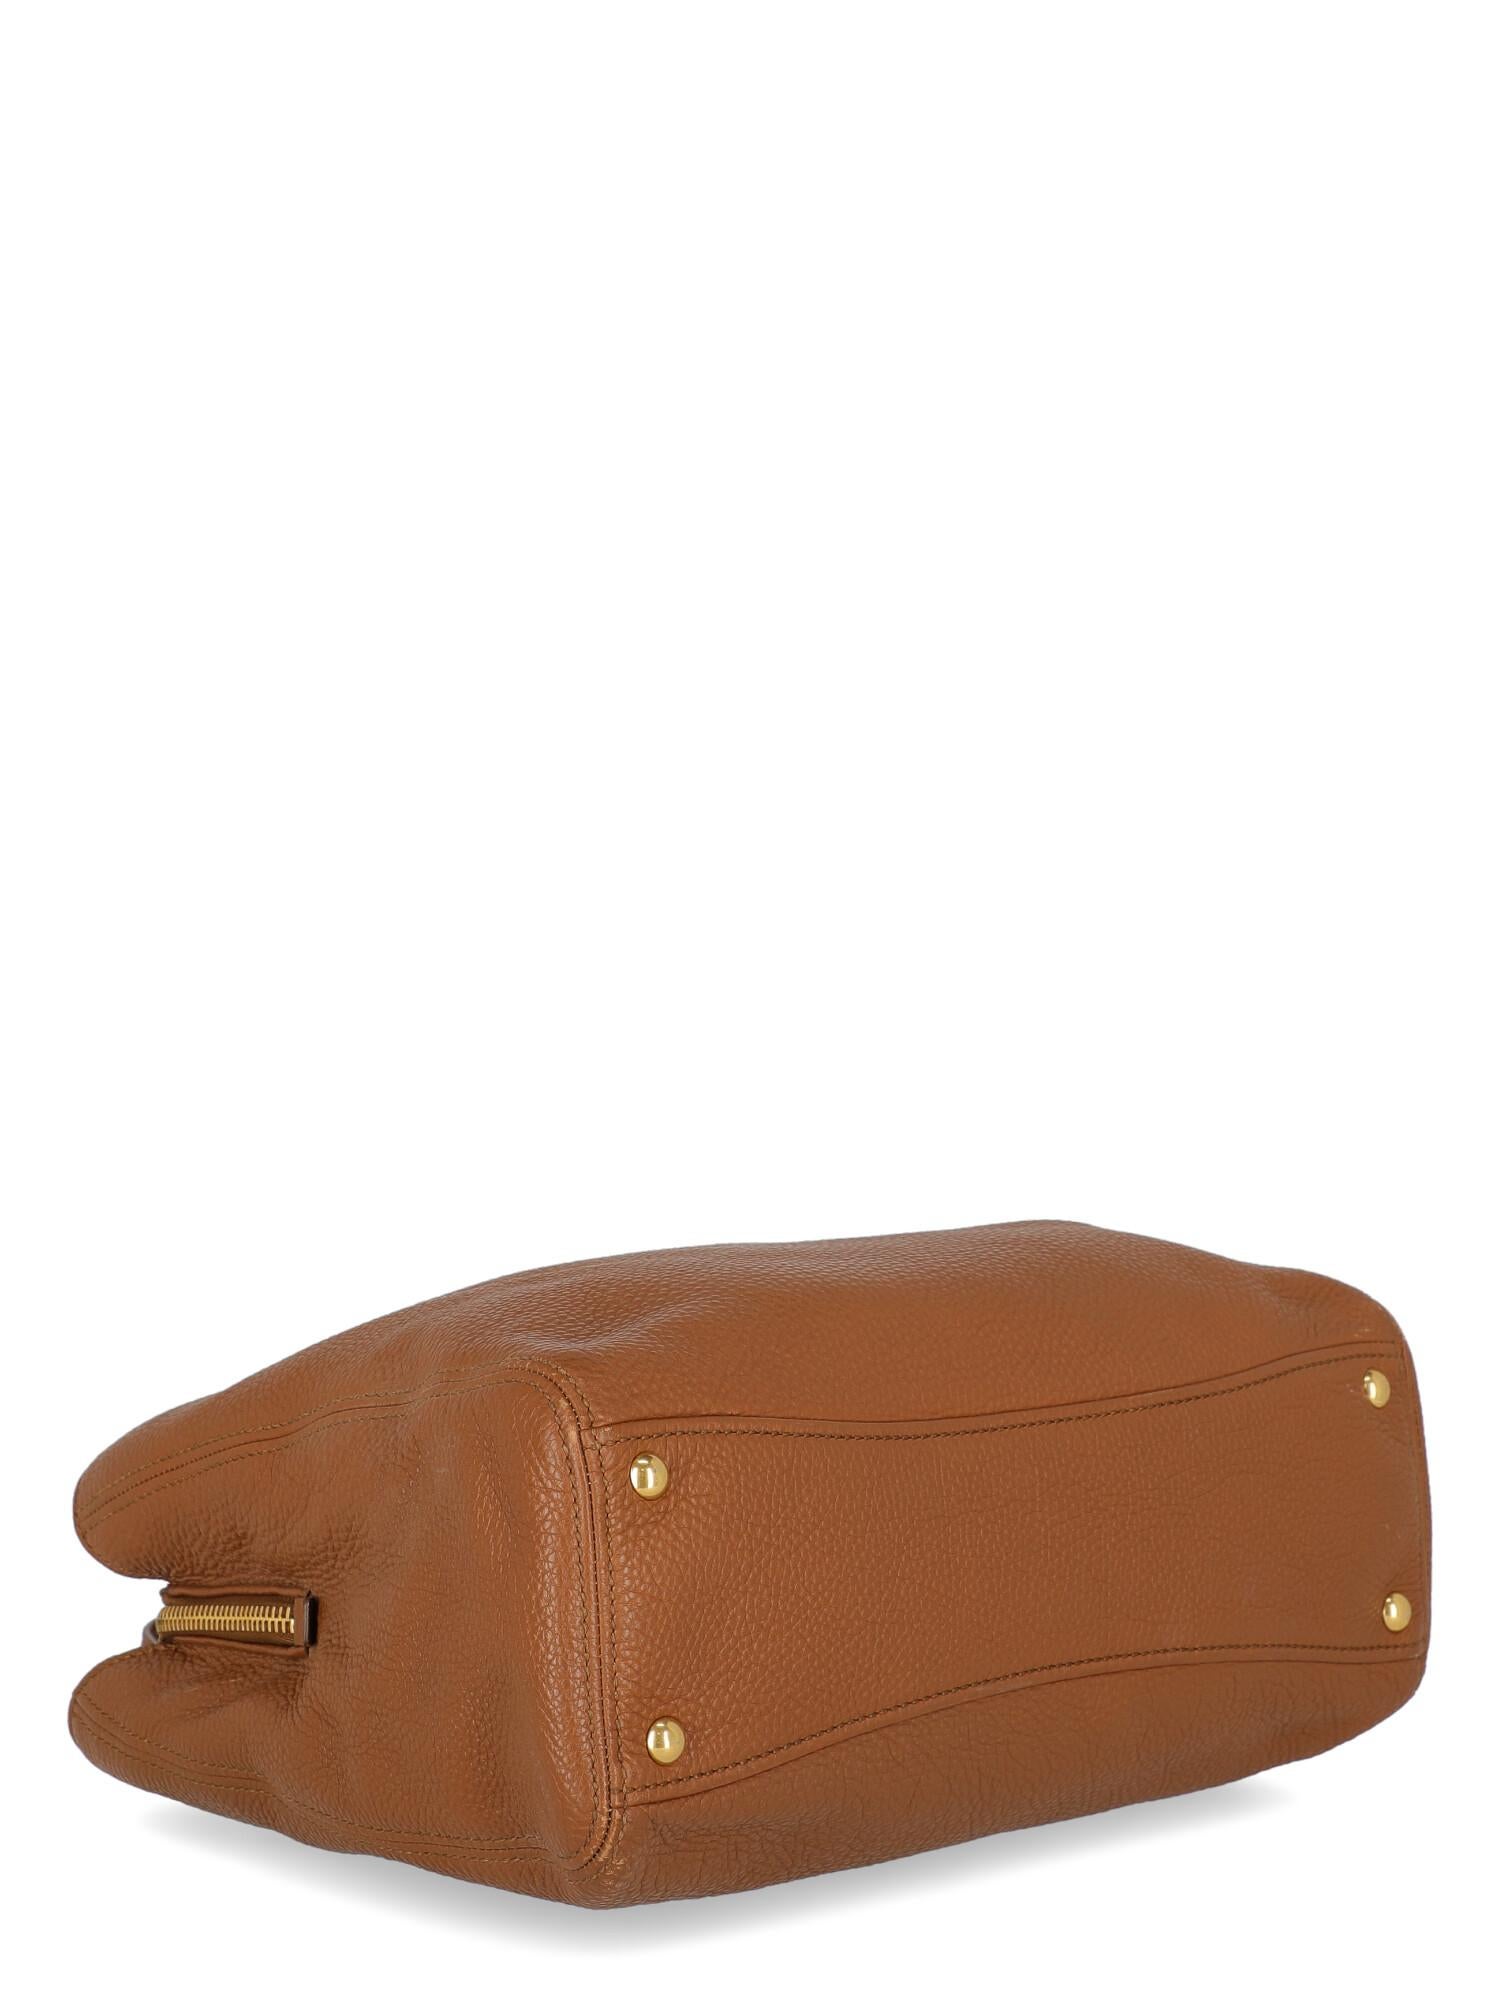 Miu Miu  Women   Handbags  Brown Leather  For Sale 1